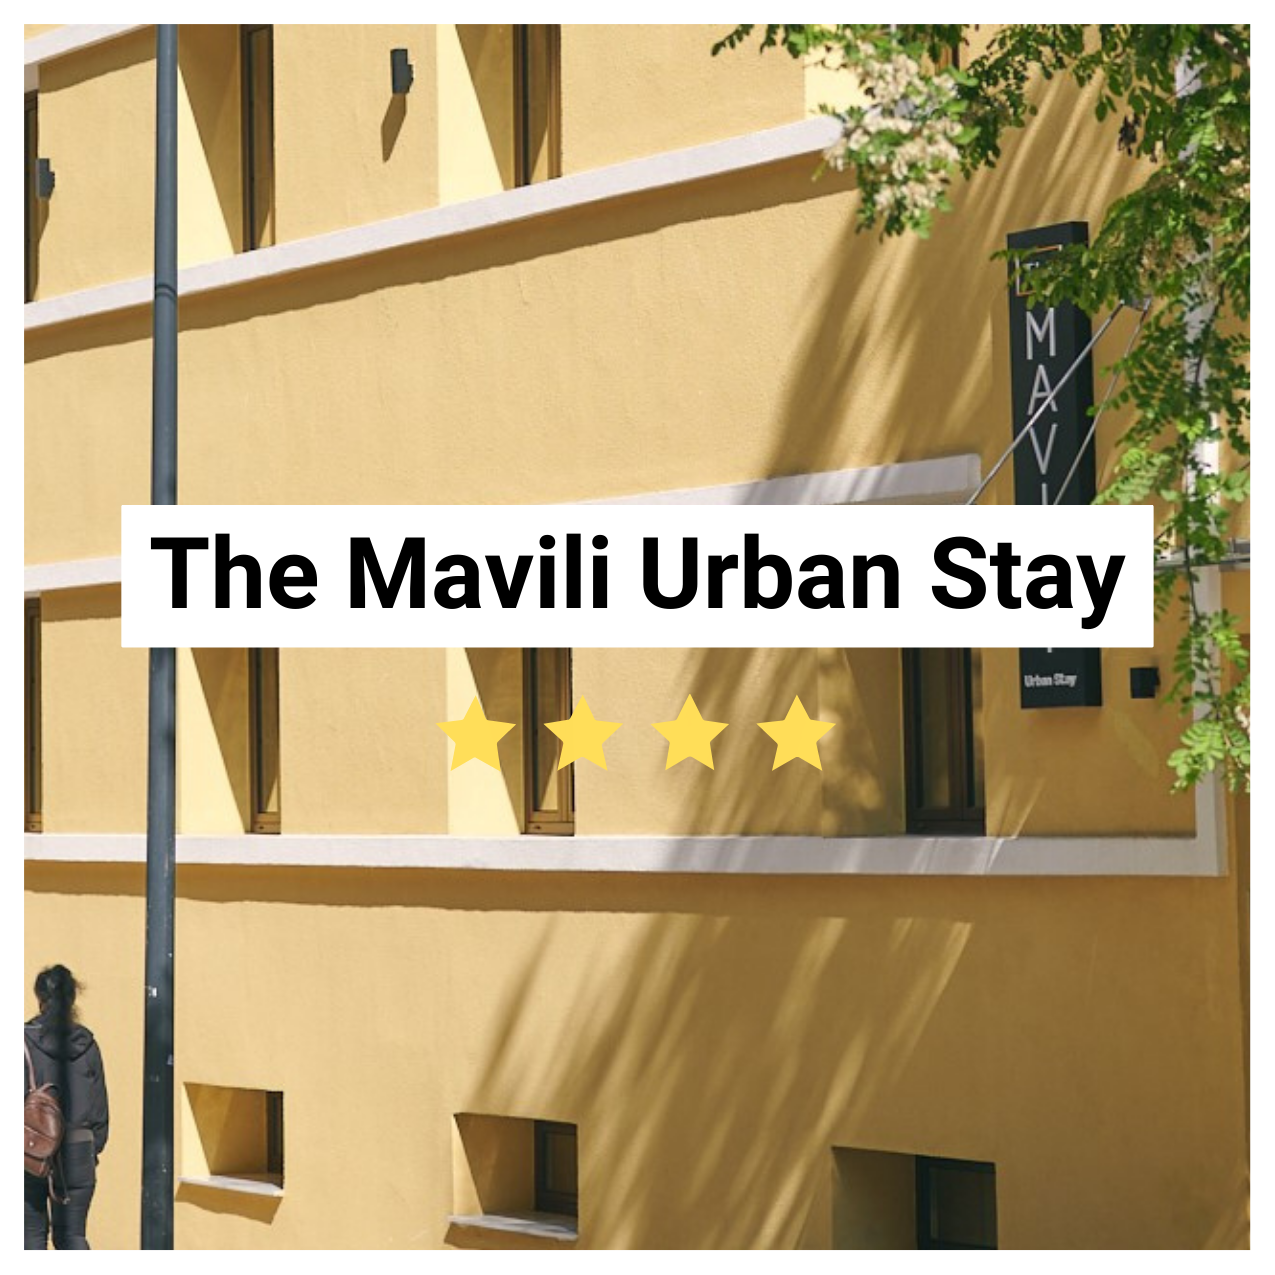 The Mavili Urban Stay Hotel Image. 